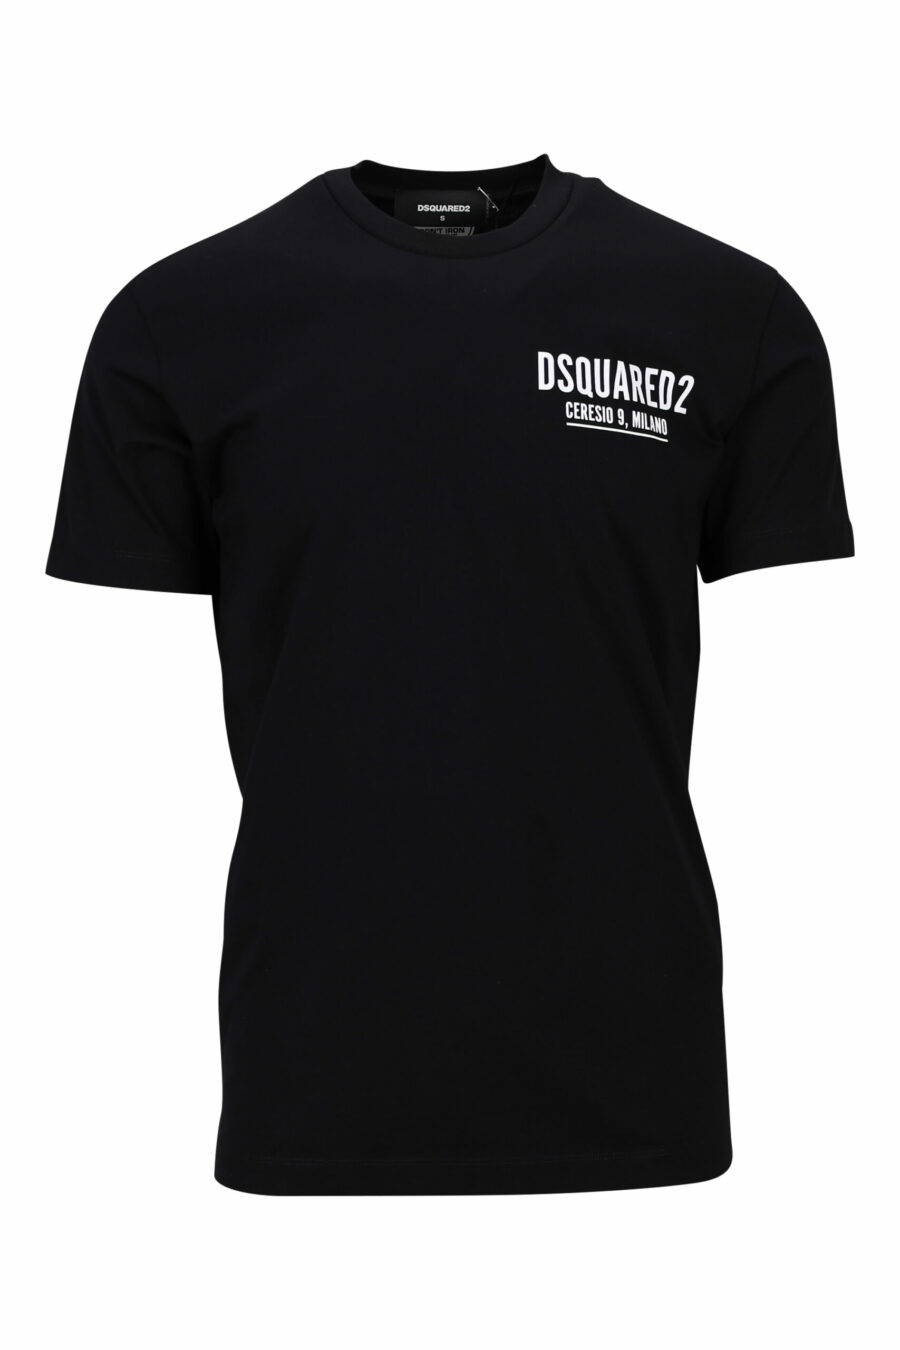 Black T-shirt with minilogo "ceresio 9, milano" - 8054148505264 scaled